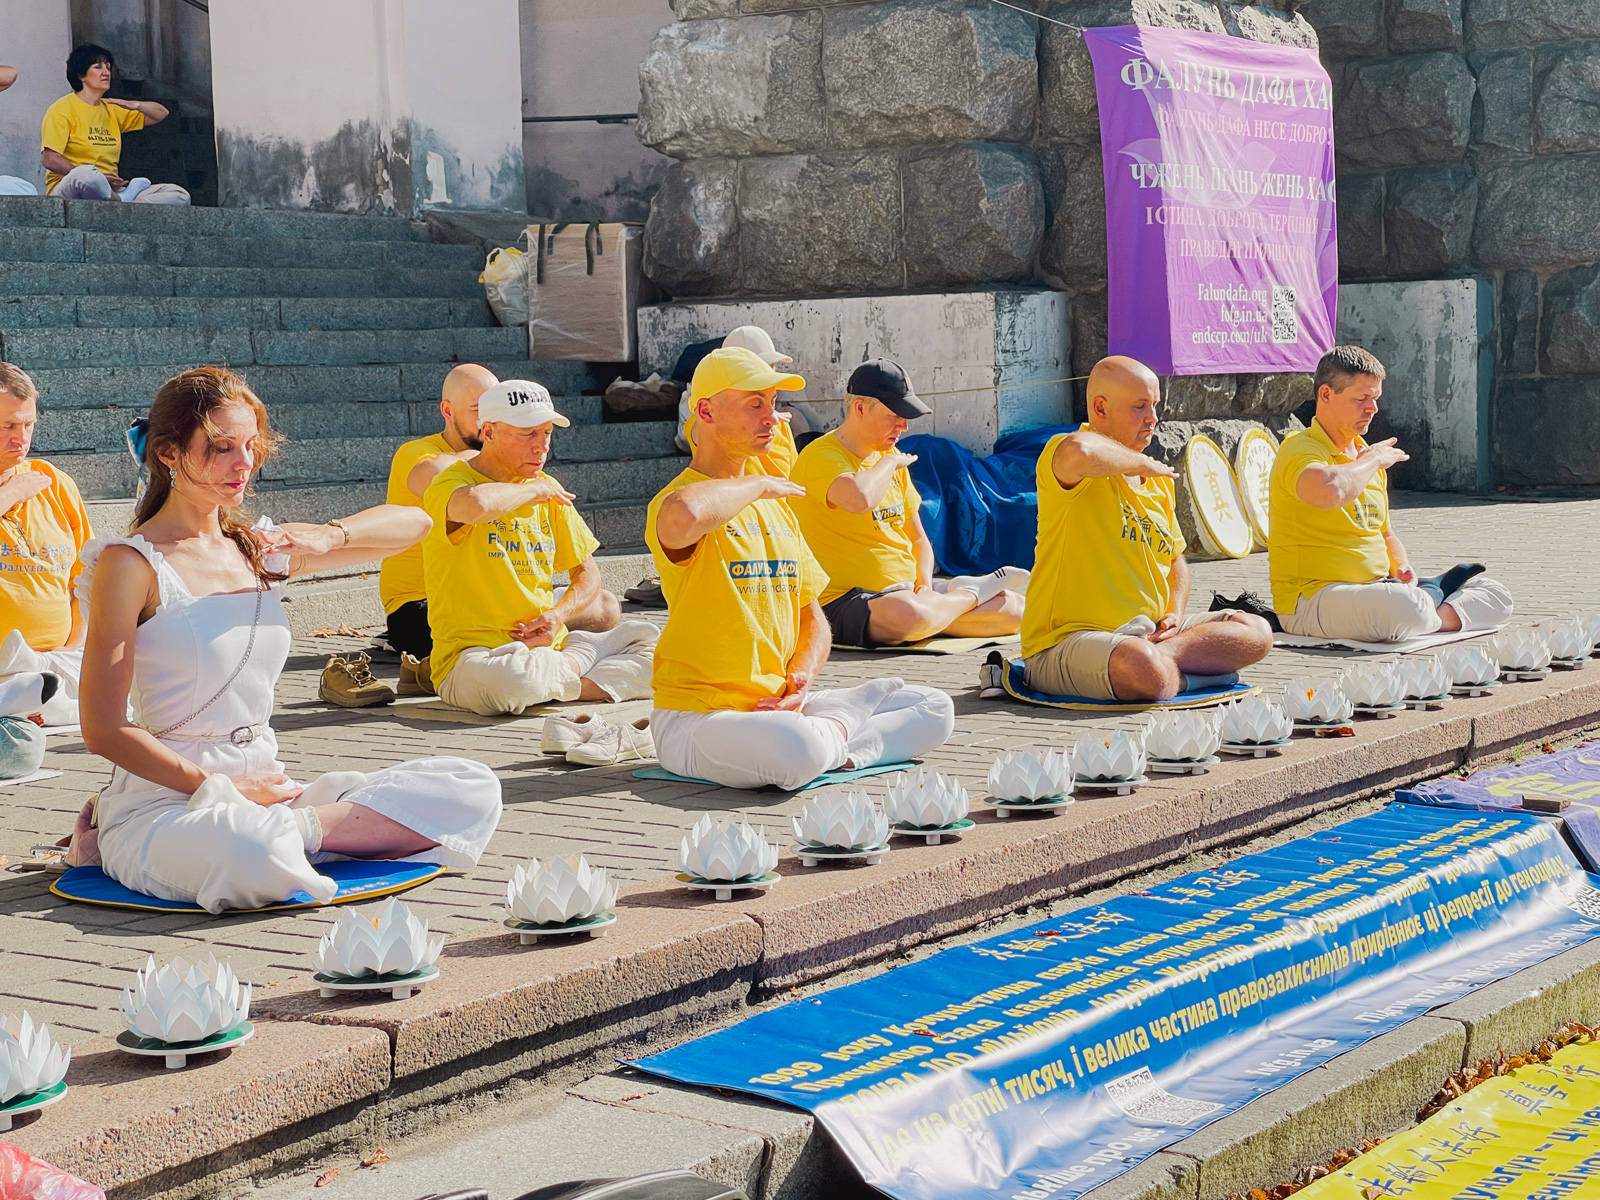 Image for article Ukraine : Présentation du Falun Dafa à Kiev